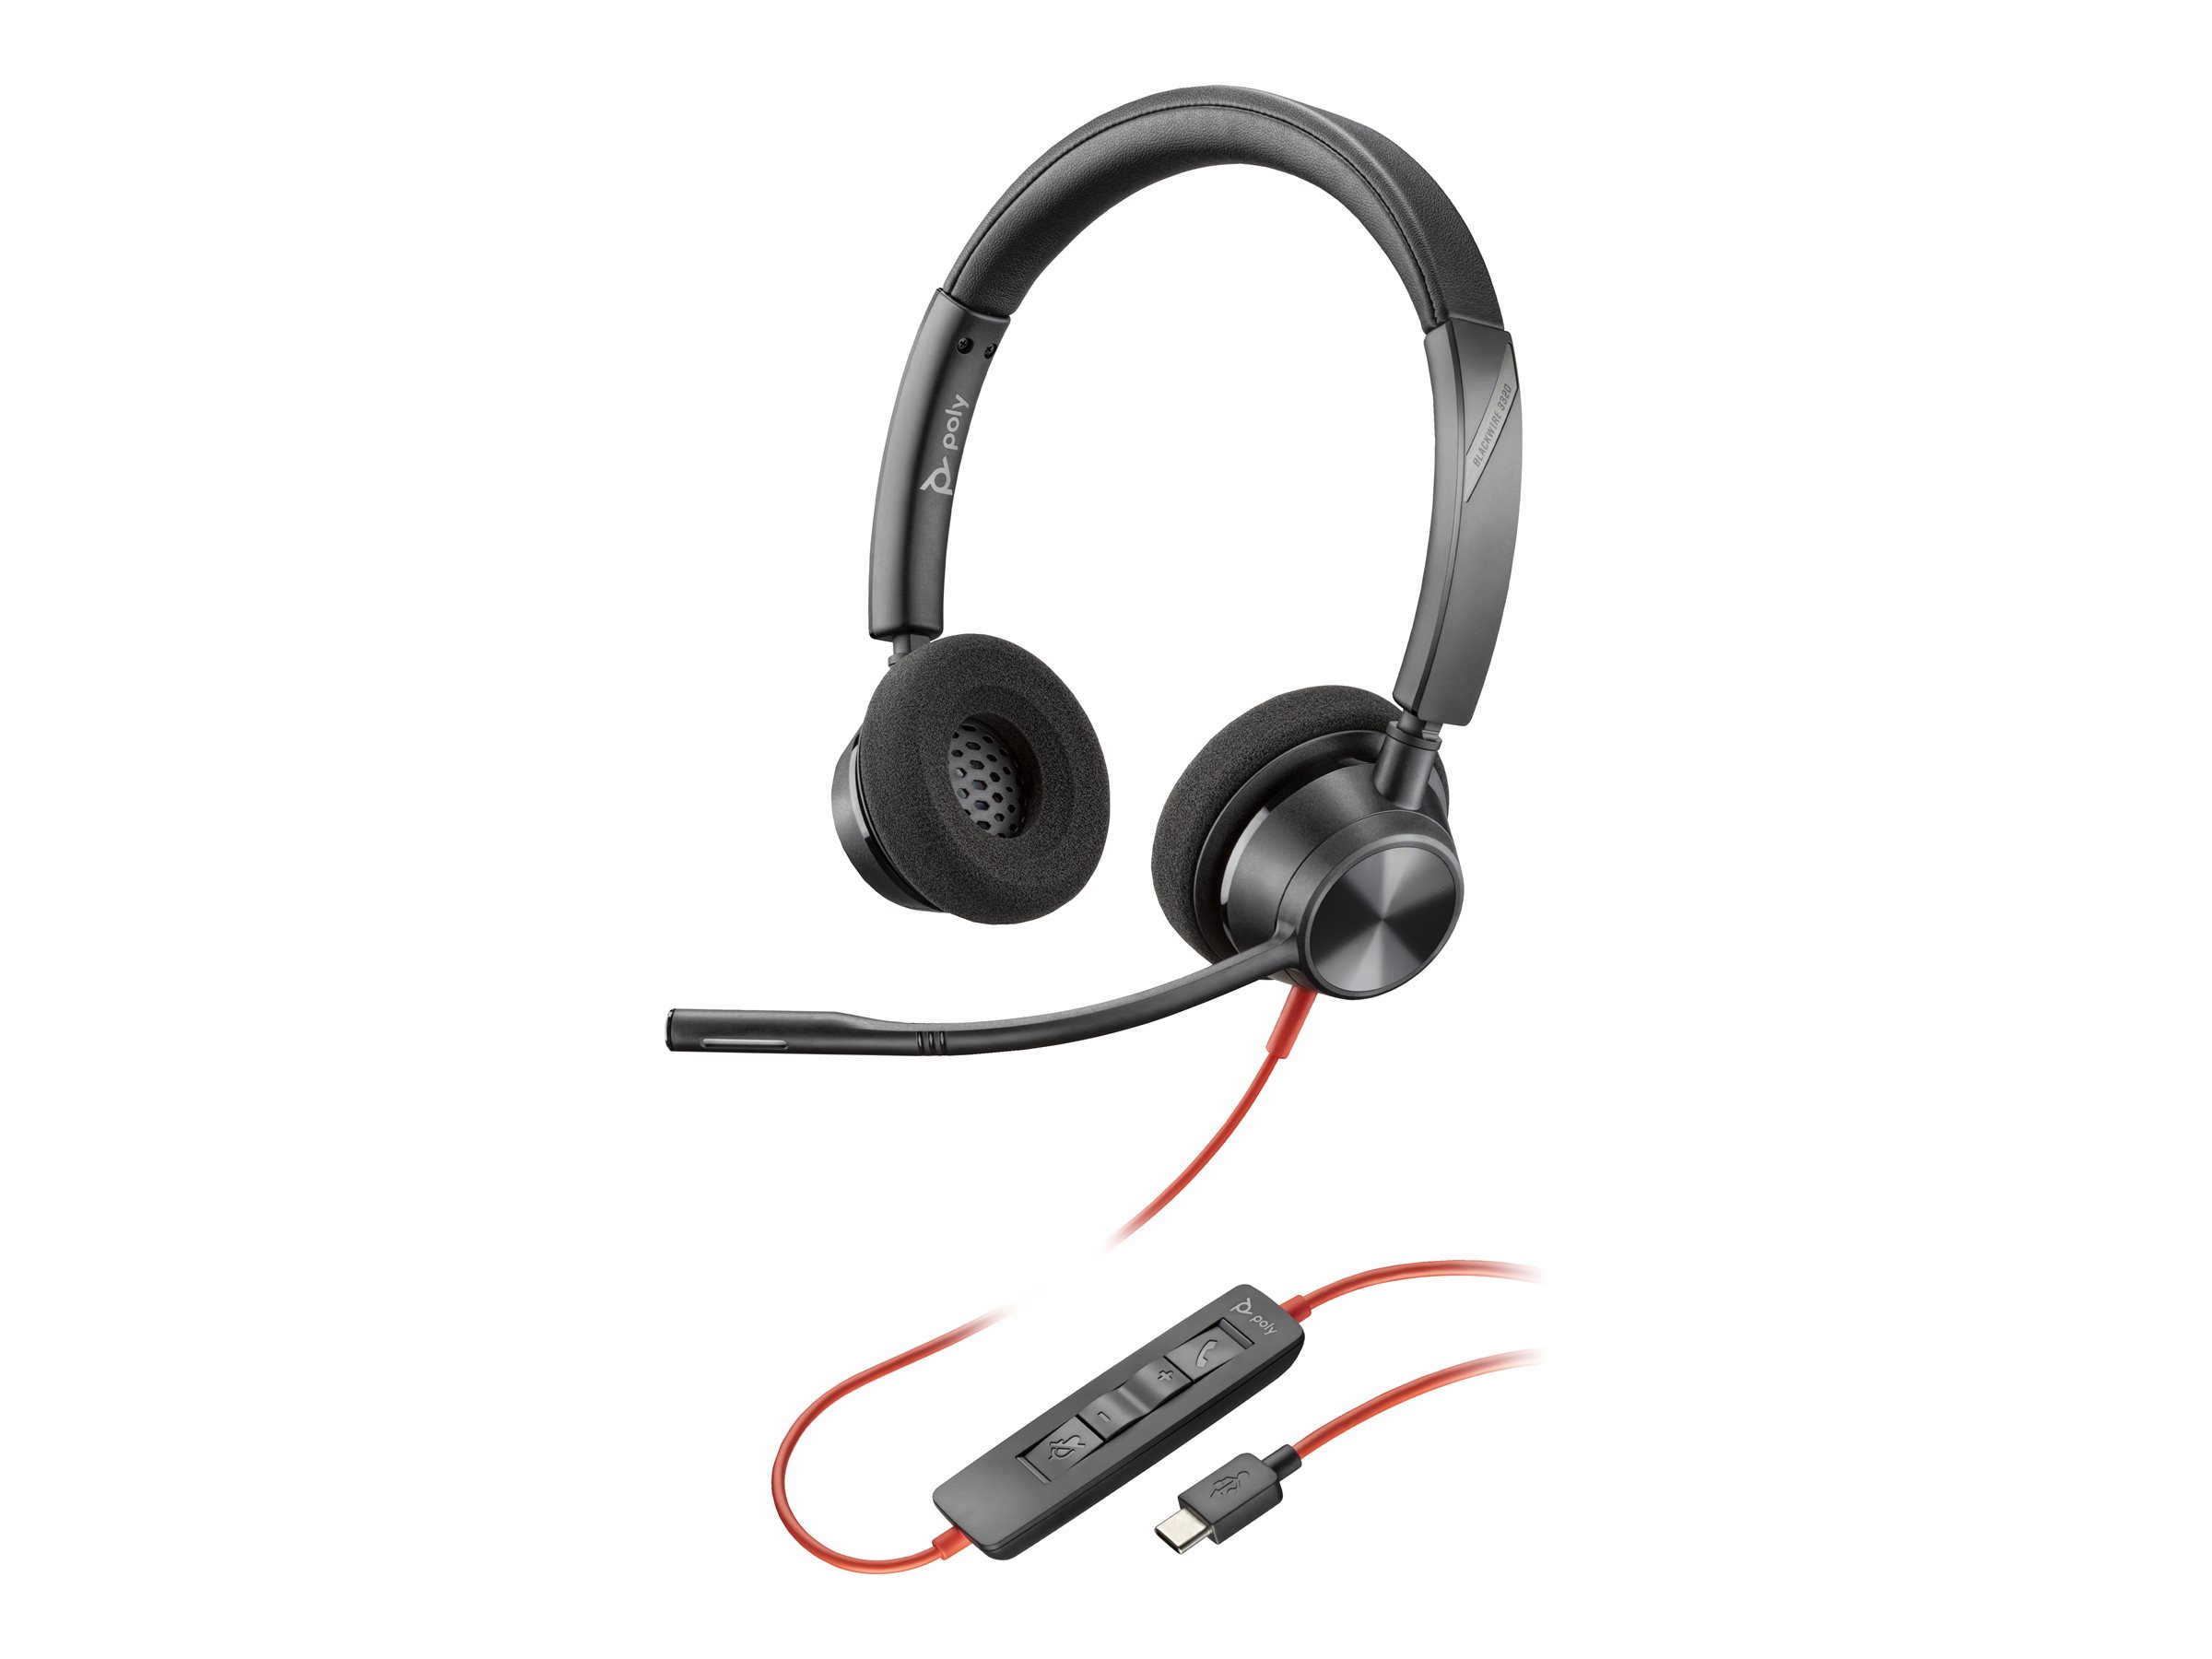 Poly Blackwire 3320 - Blackwire 3300 series - Headset - On-Ear - kabelgebunden - USB-C